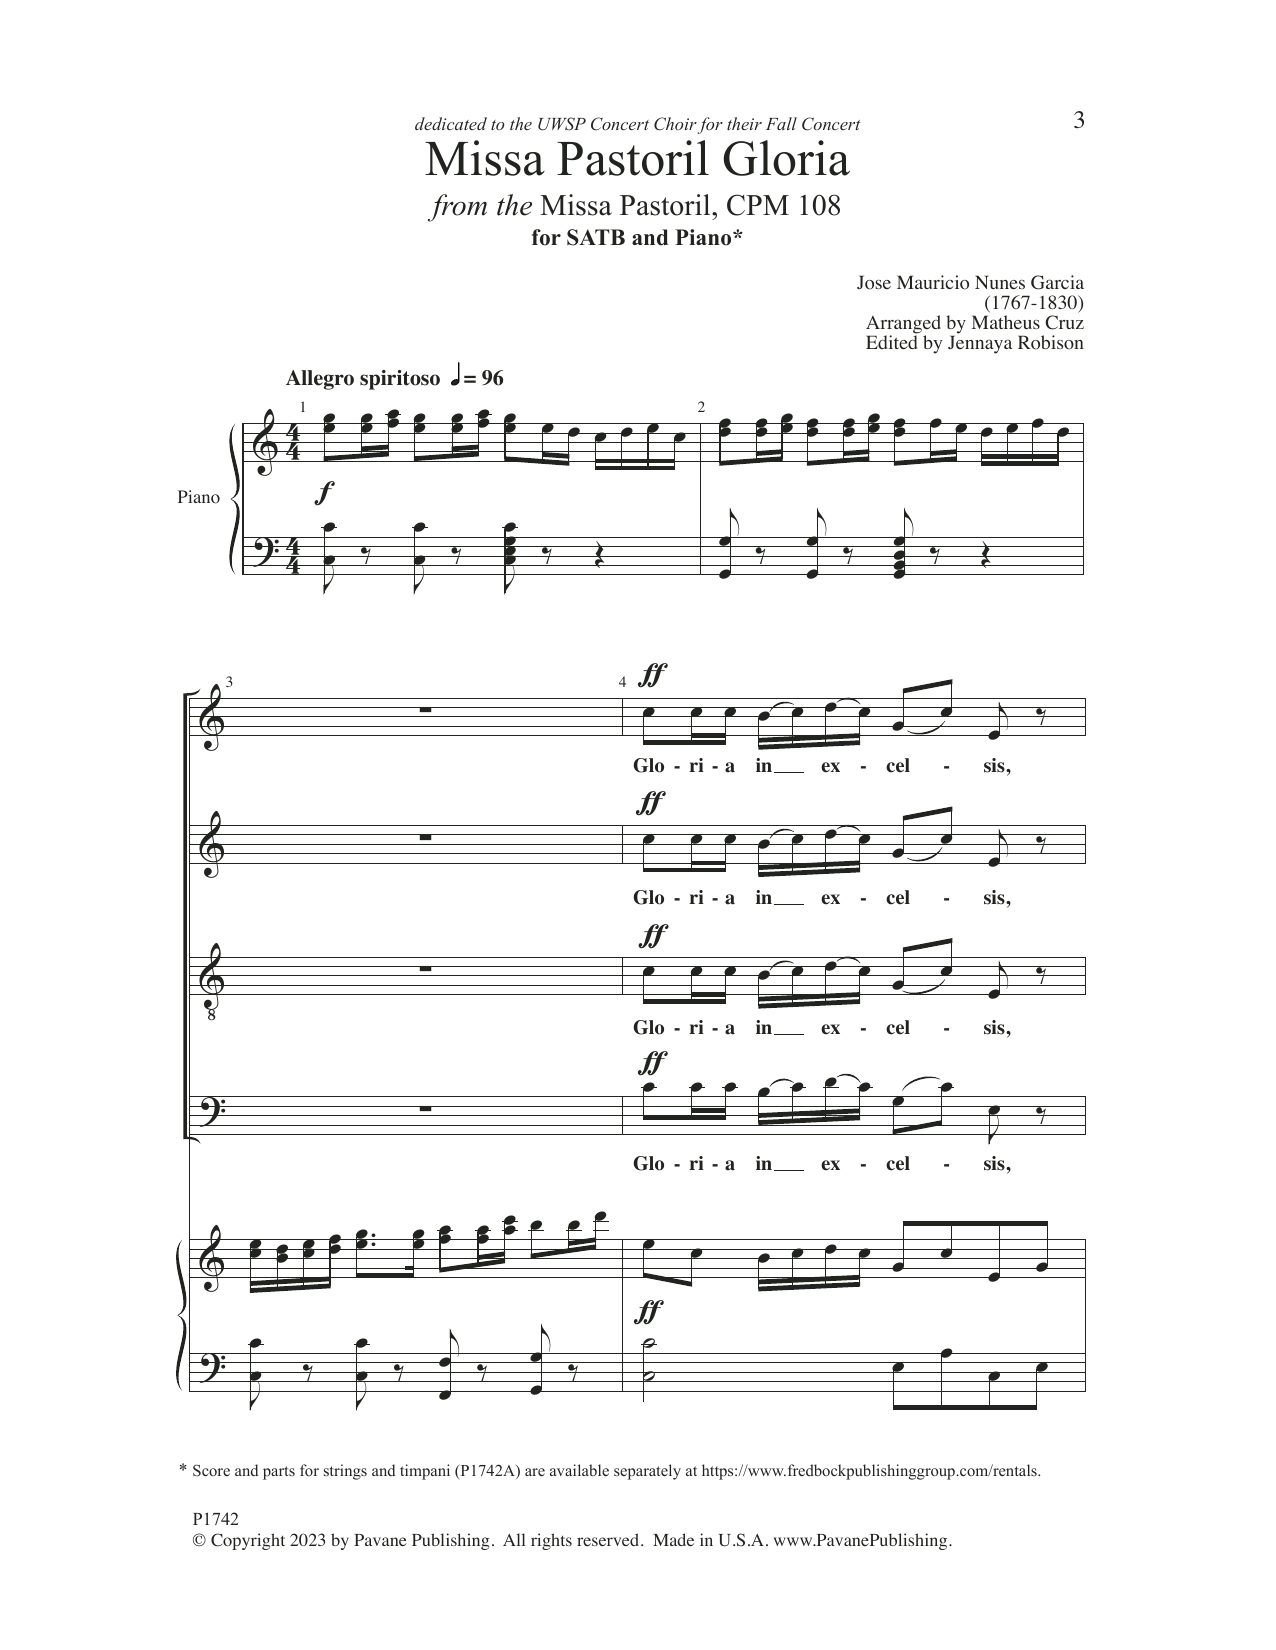 Matheus Cruz Missa Gloria Pastoril (from the Missa Pastoril, CPM 108) Sheet Music Notes & Chords for SATB Choir - Download or Print PDF